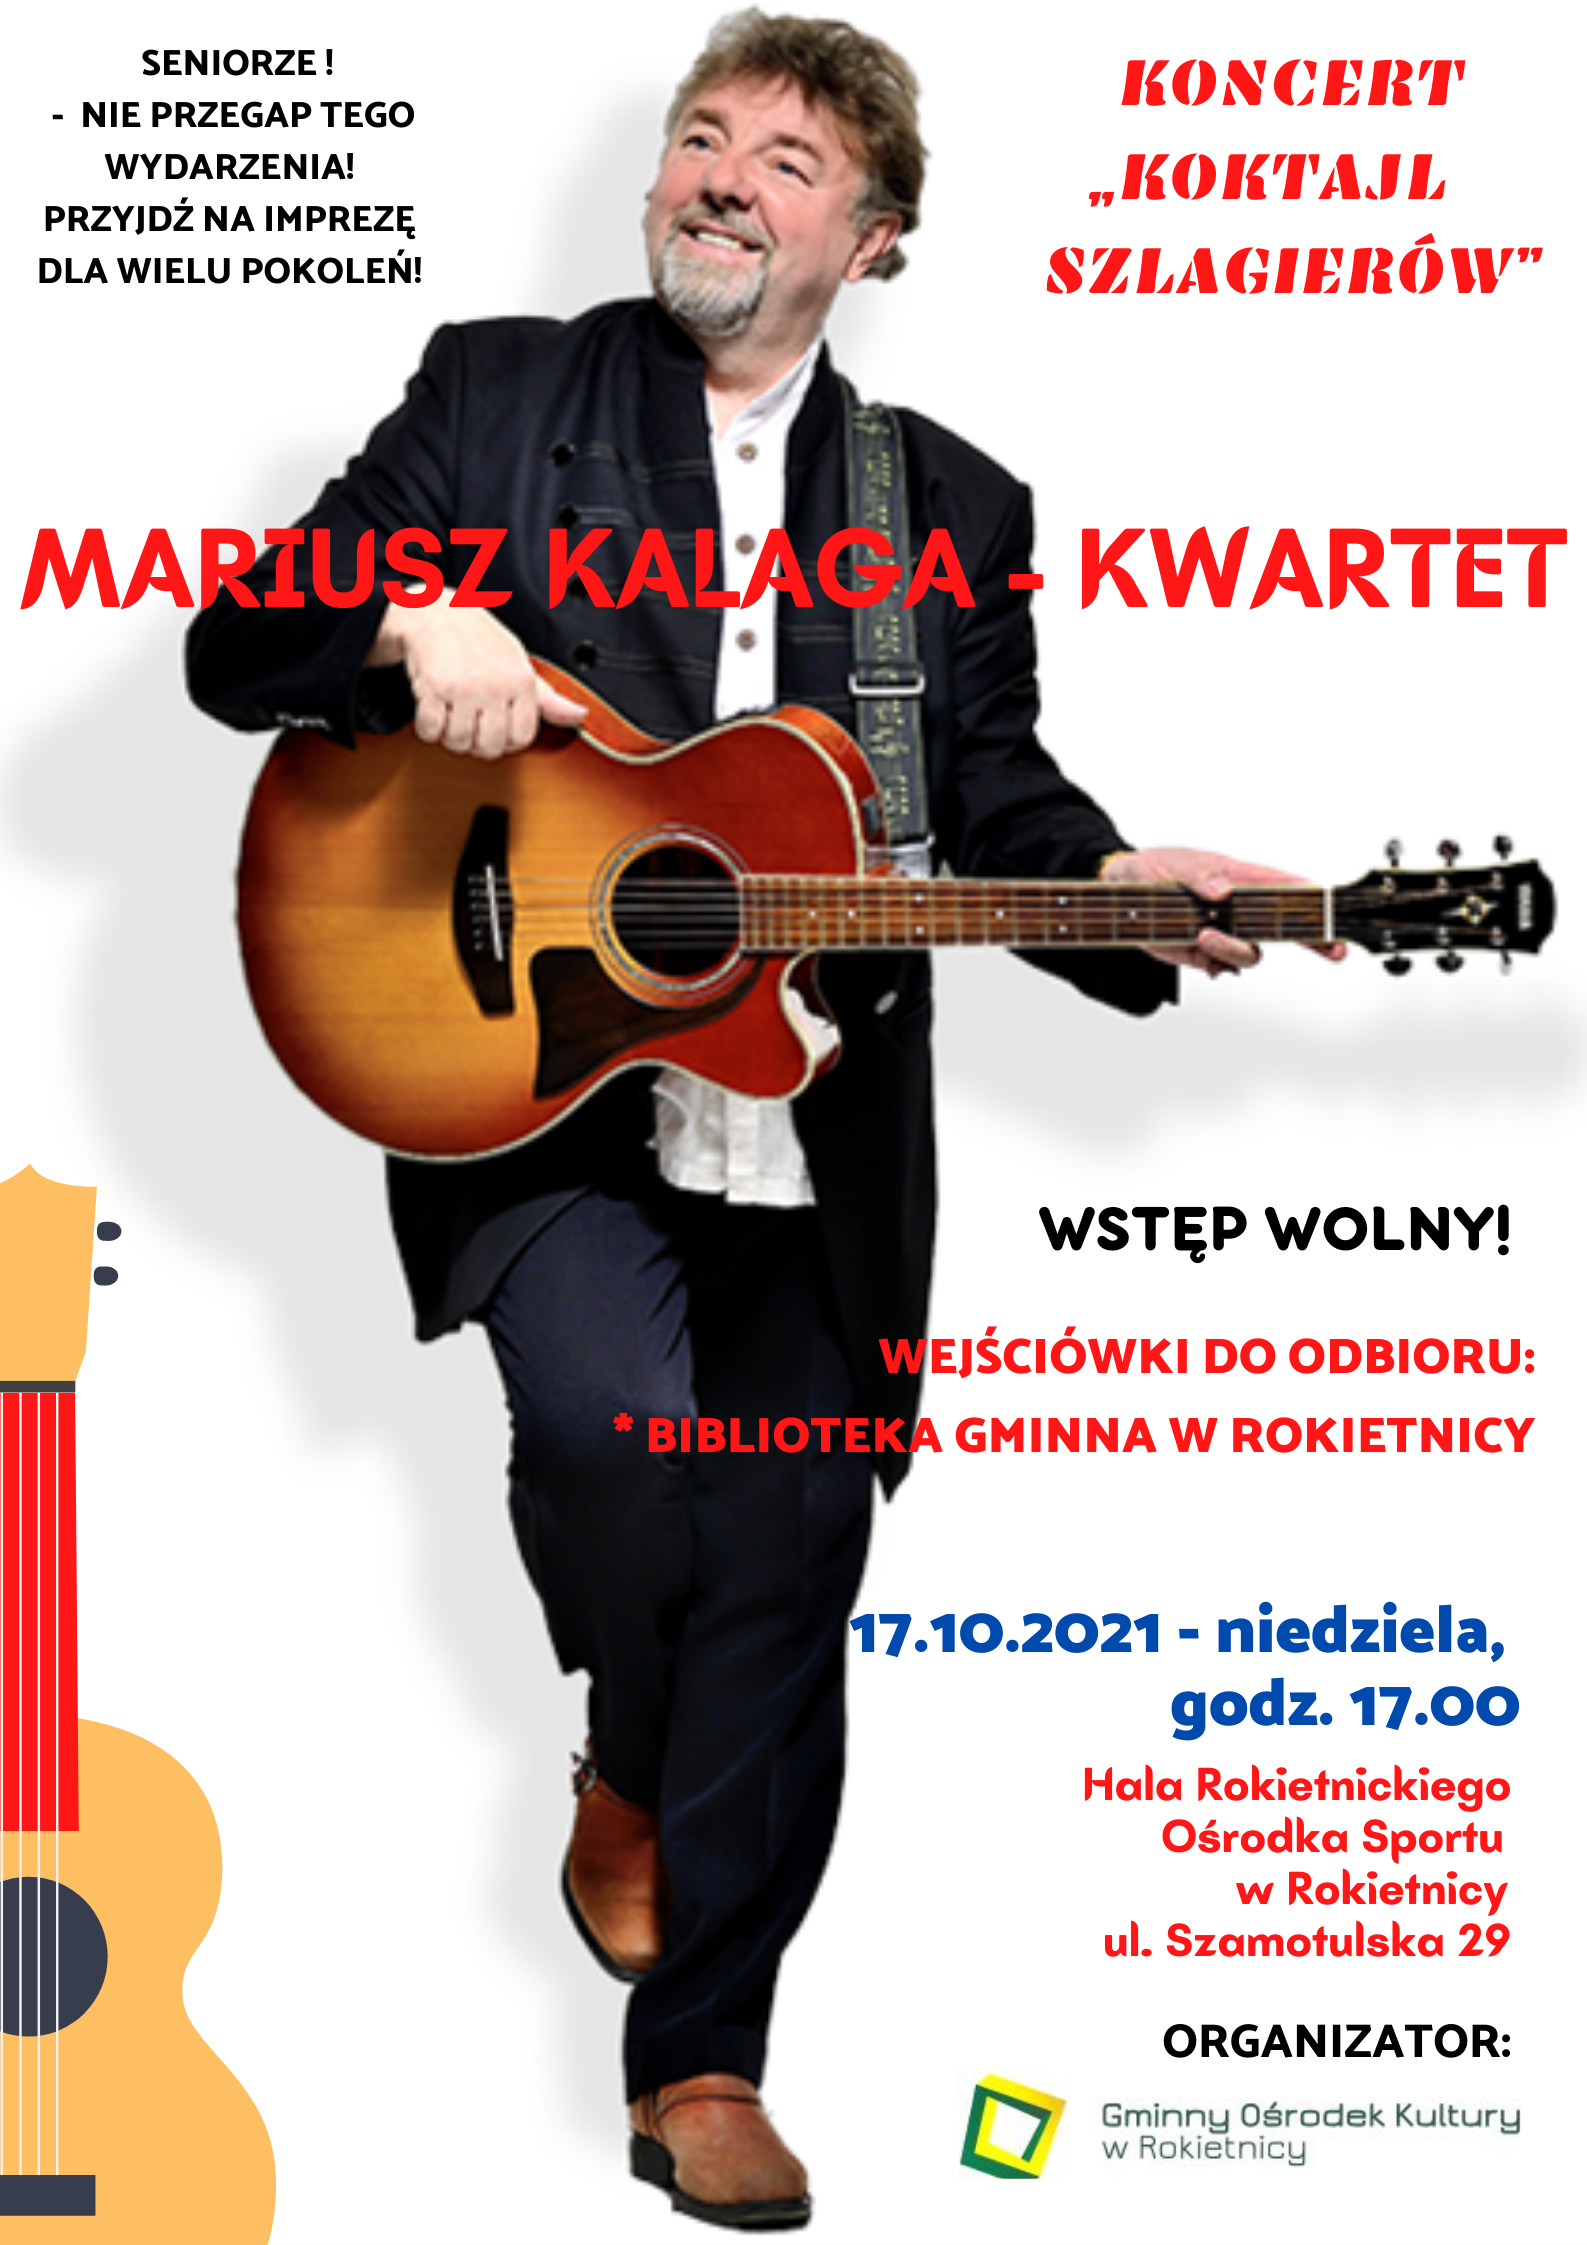 Mariusz Kalaga